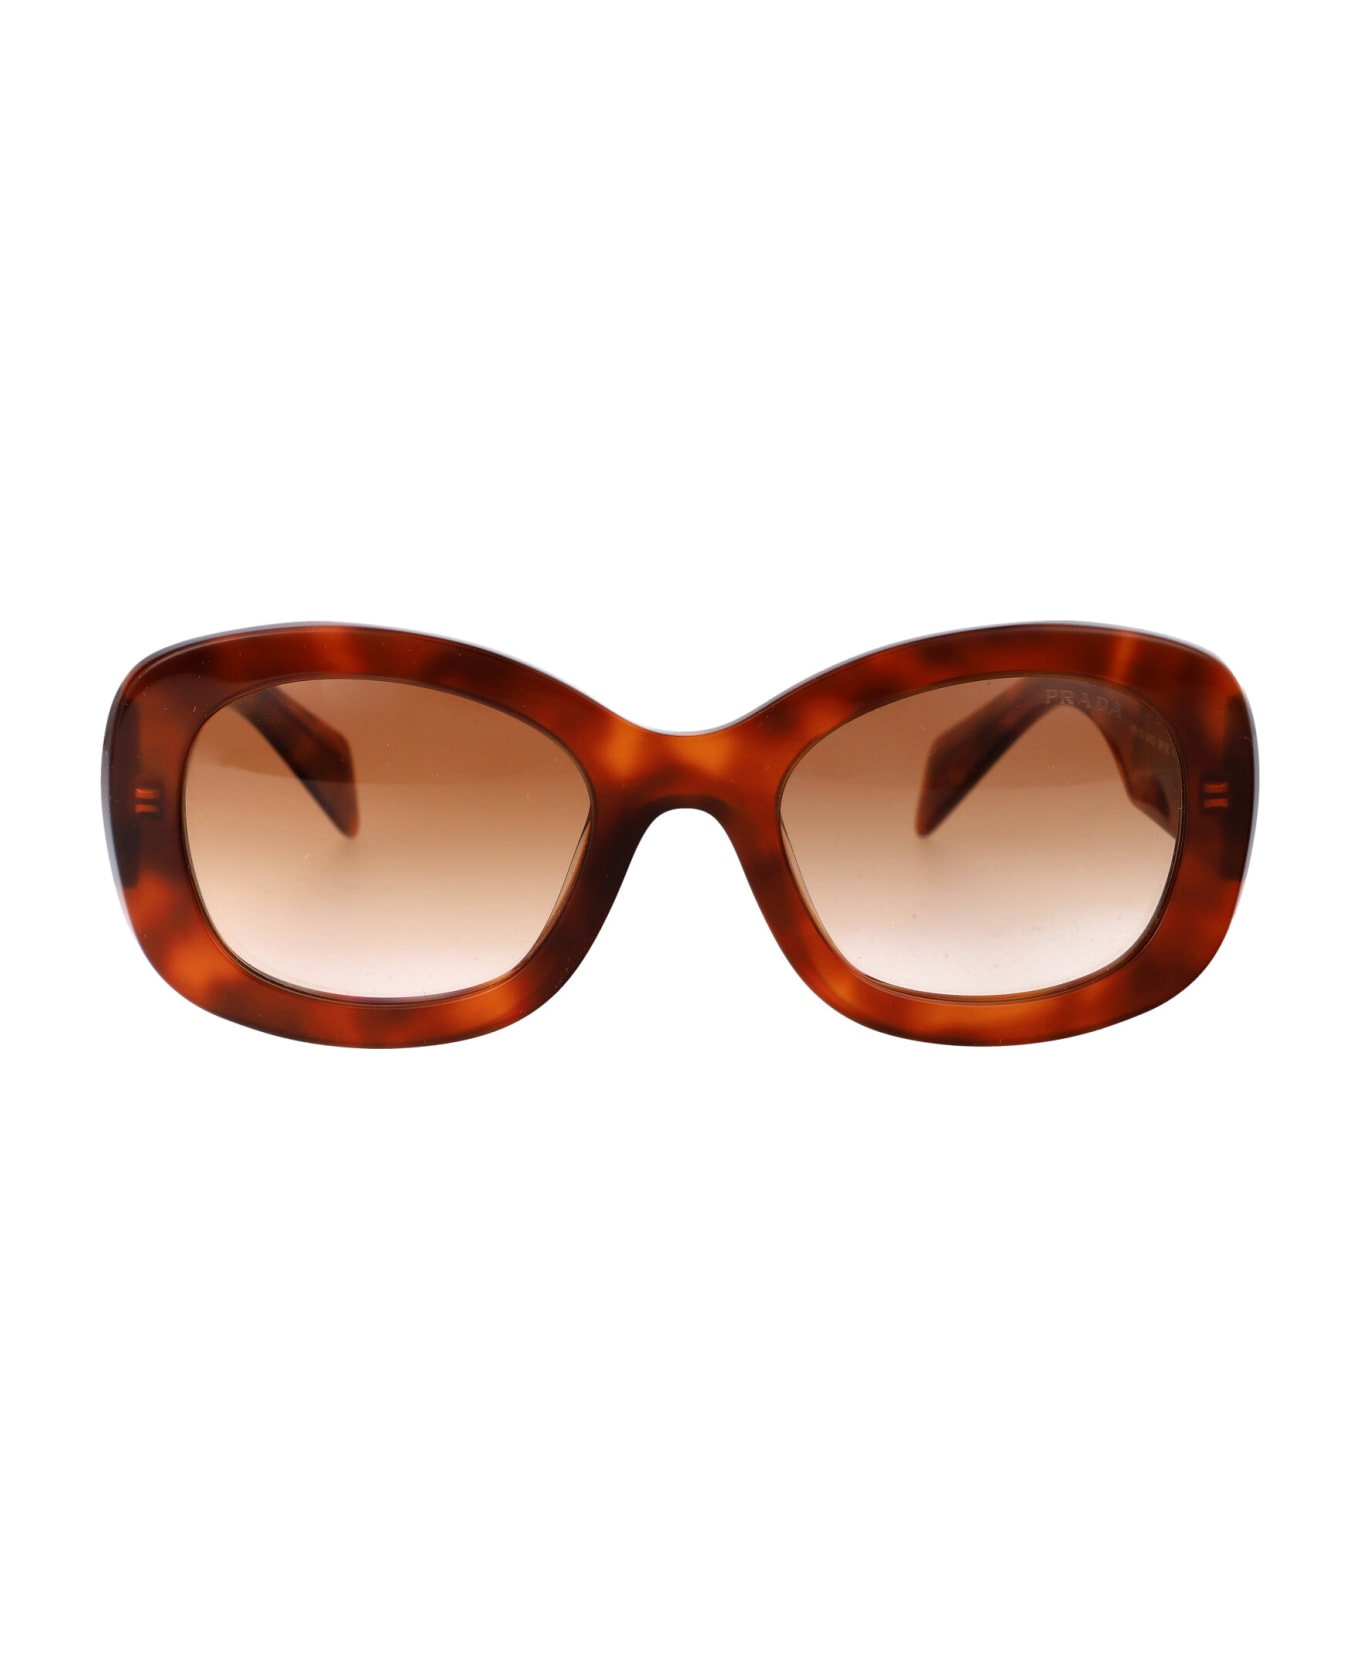 Prada Eyewear 0pr A13s Sunglasses - 18R70E Cognac Tortoise